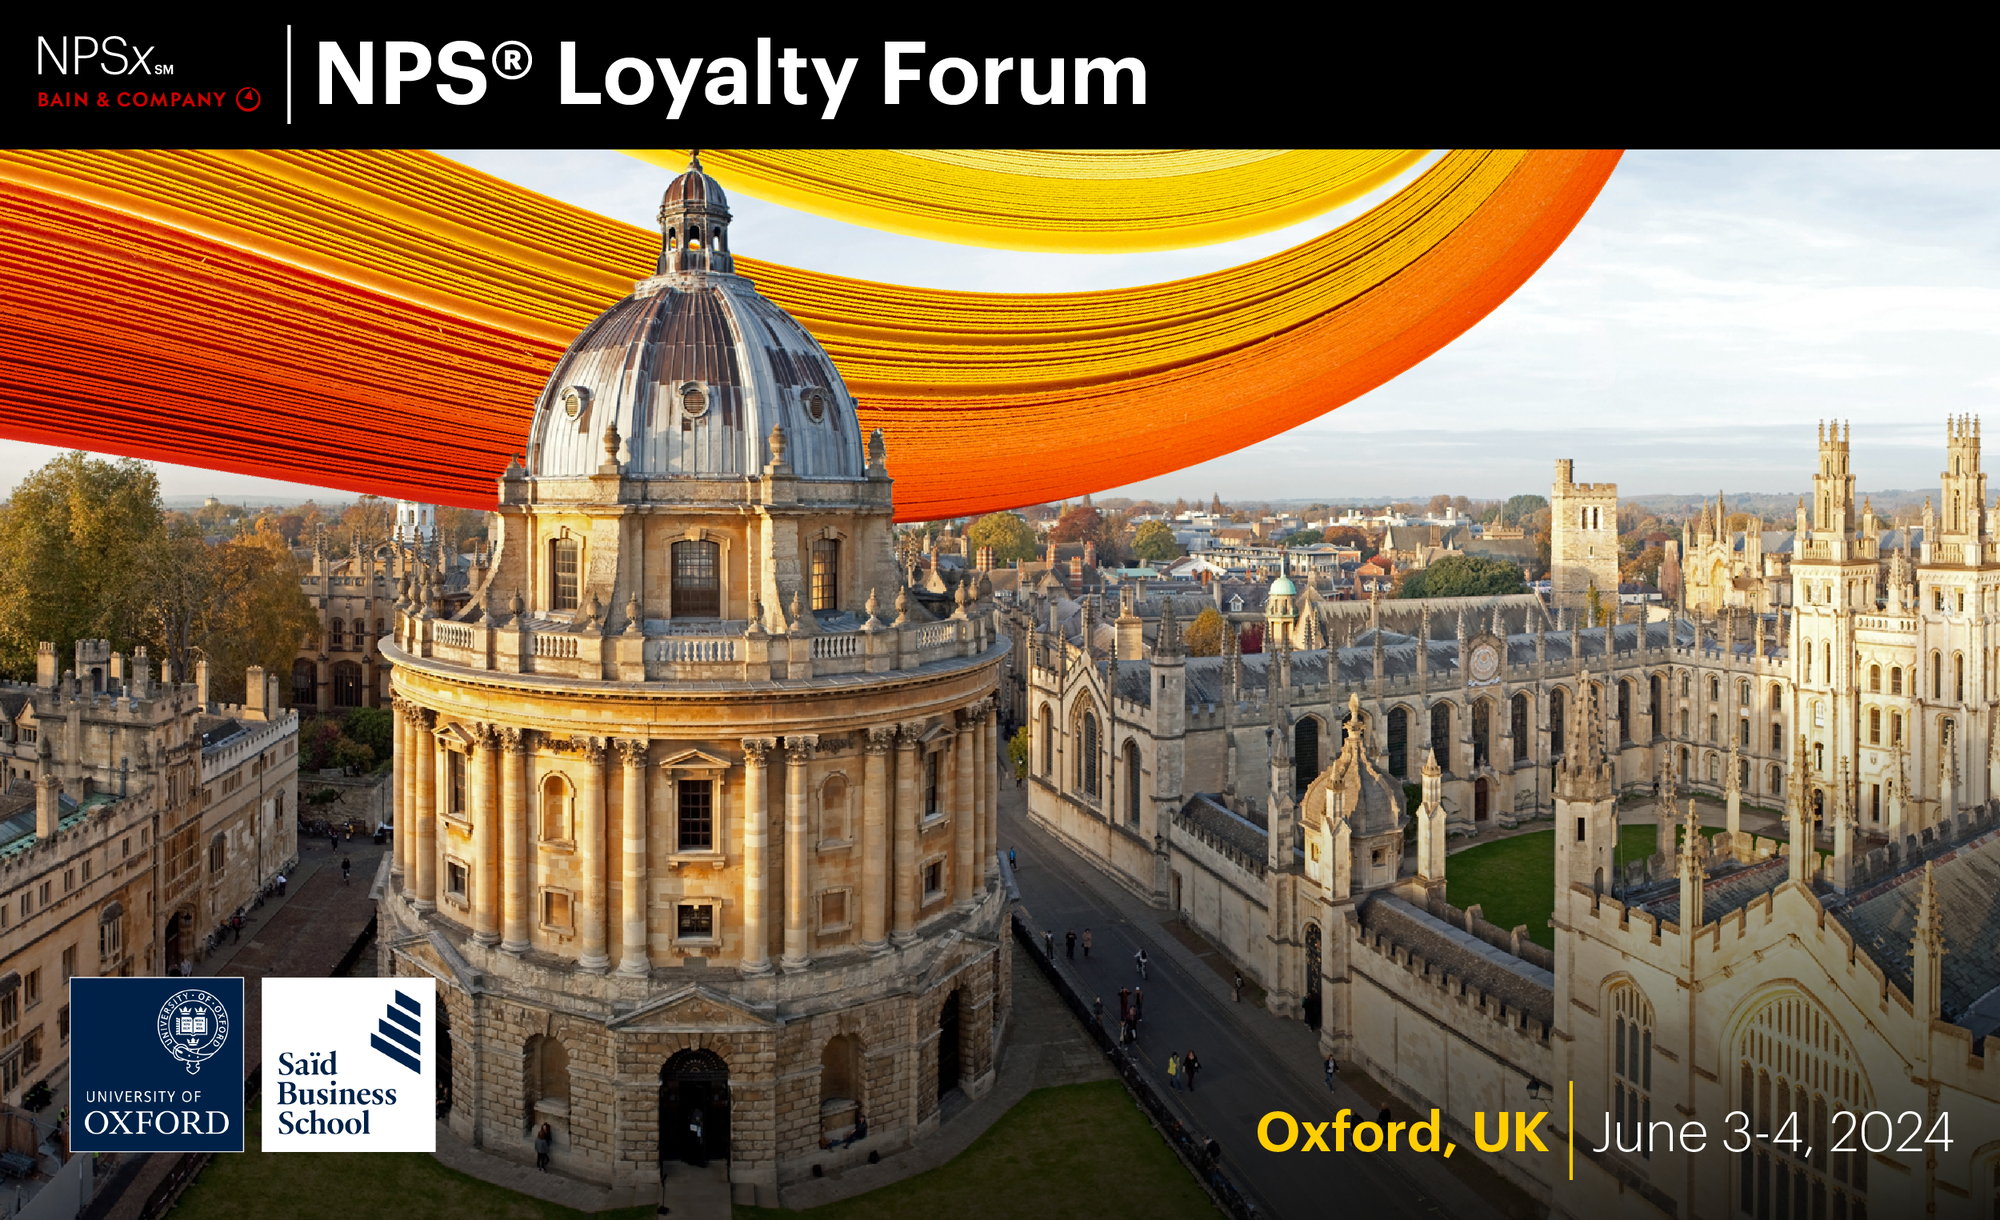 NPS Loyalty Forum Oxford